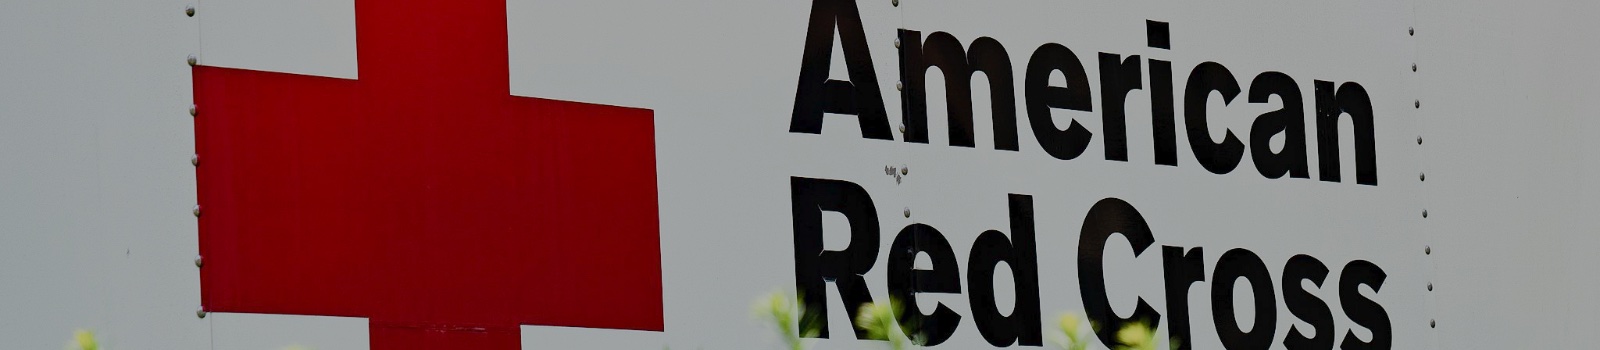 American Red Cross Serving Eastern South Dakota - United Way of ...